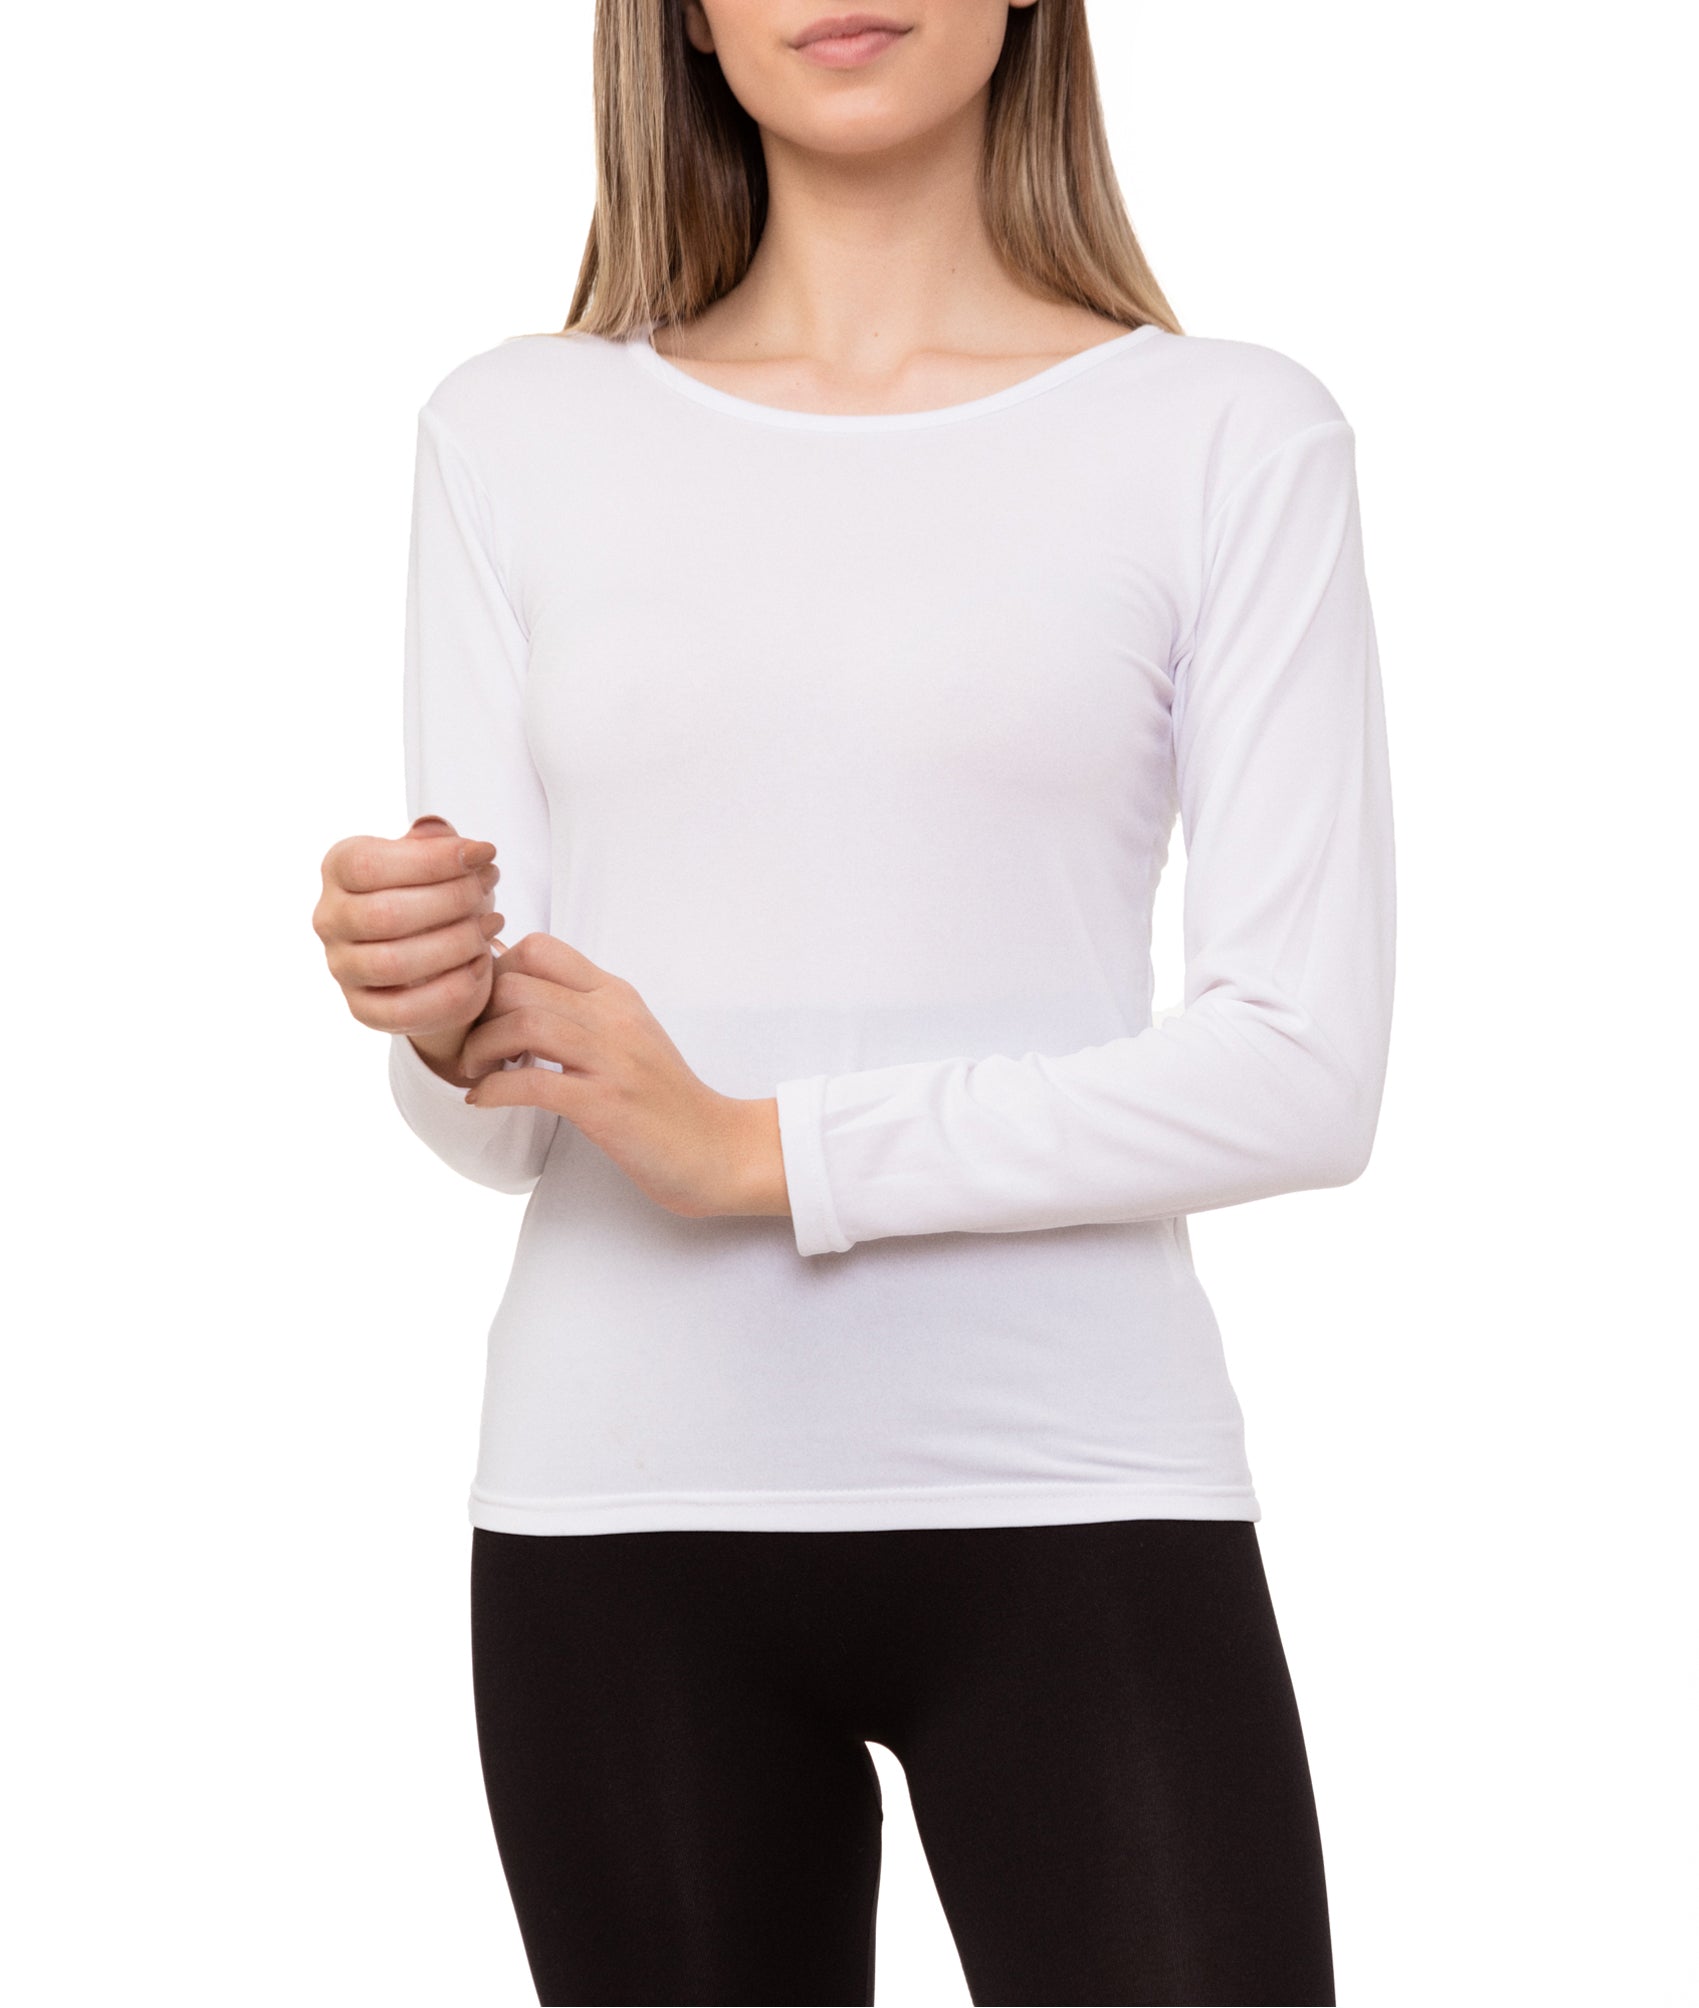 Camiseta térmica de manga larga con cuello alto para mujer, ajustada,  ligera, delgada, básica, de color sólido, camiseta interior